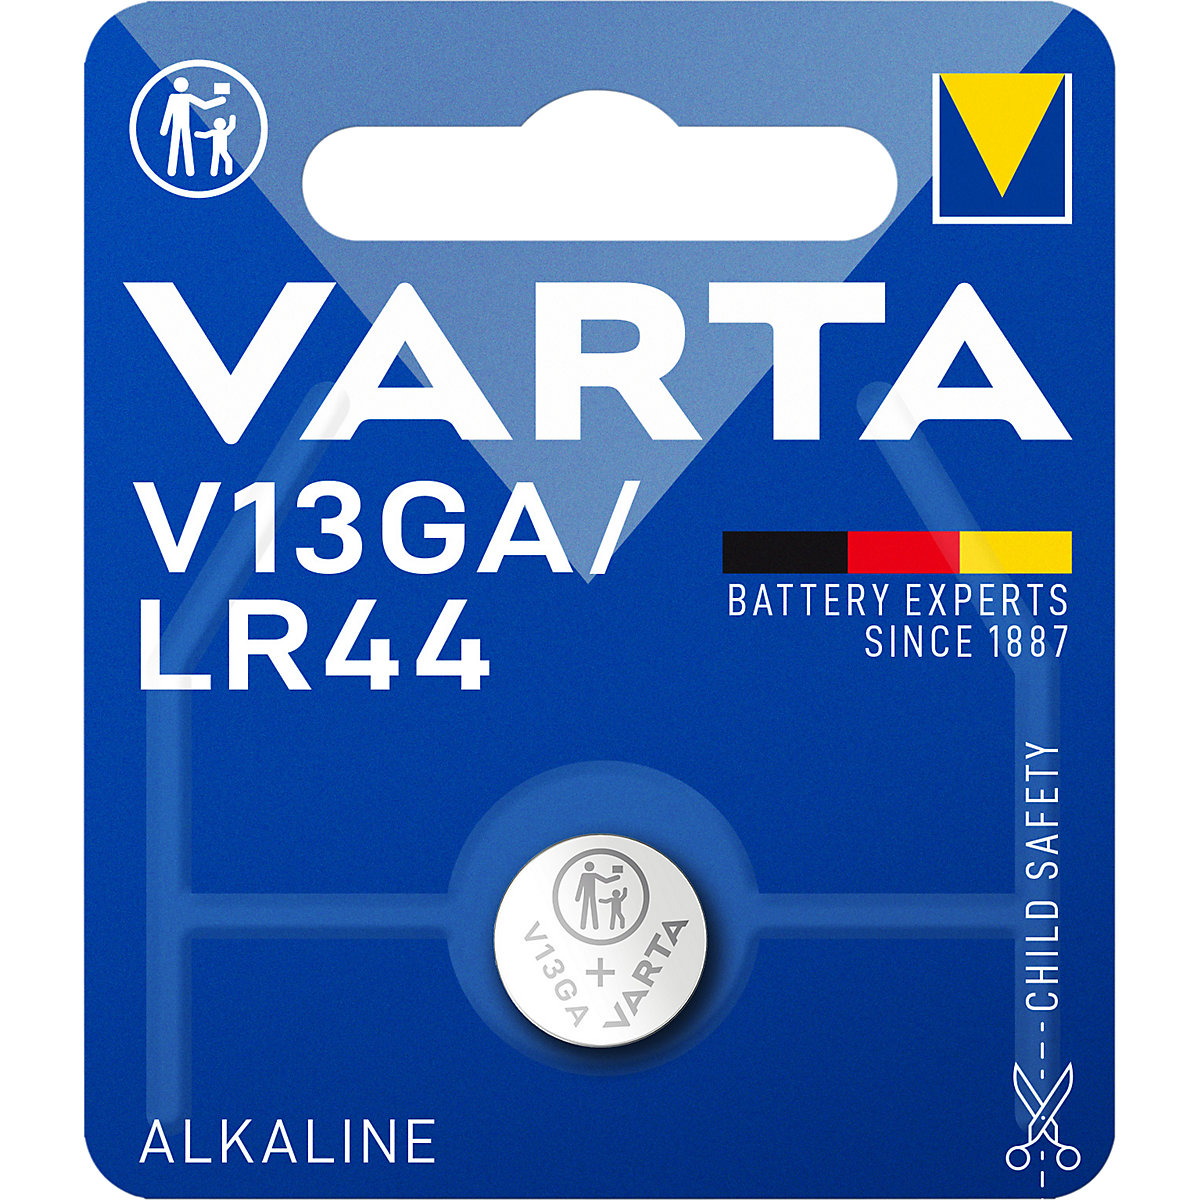 Bateria especial ALKALINE – VARTA